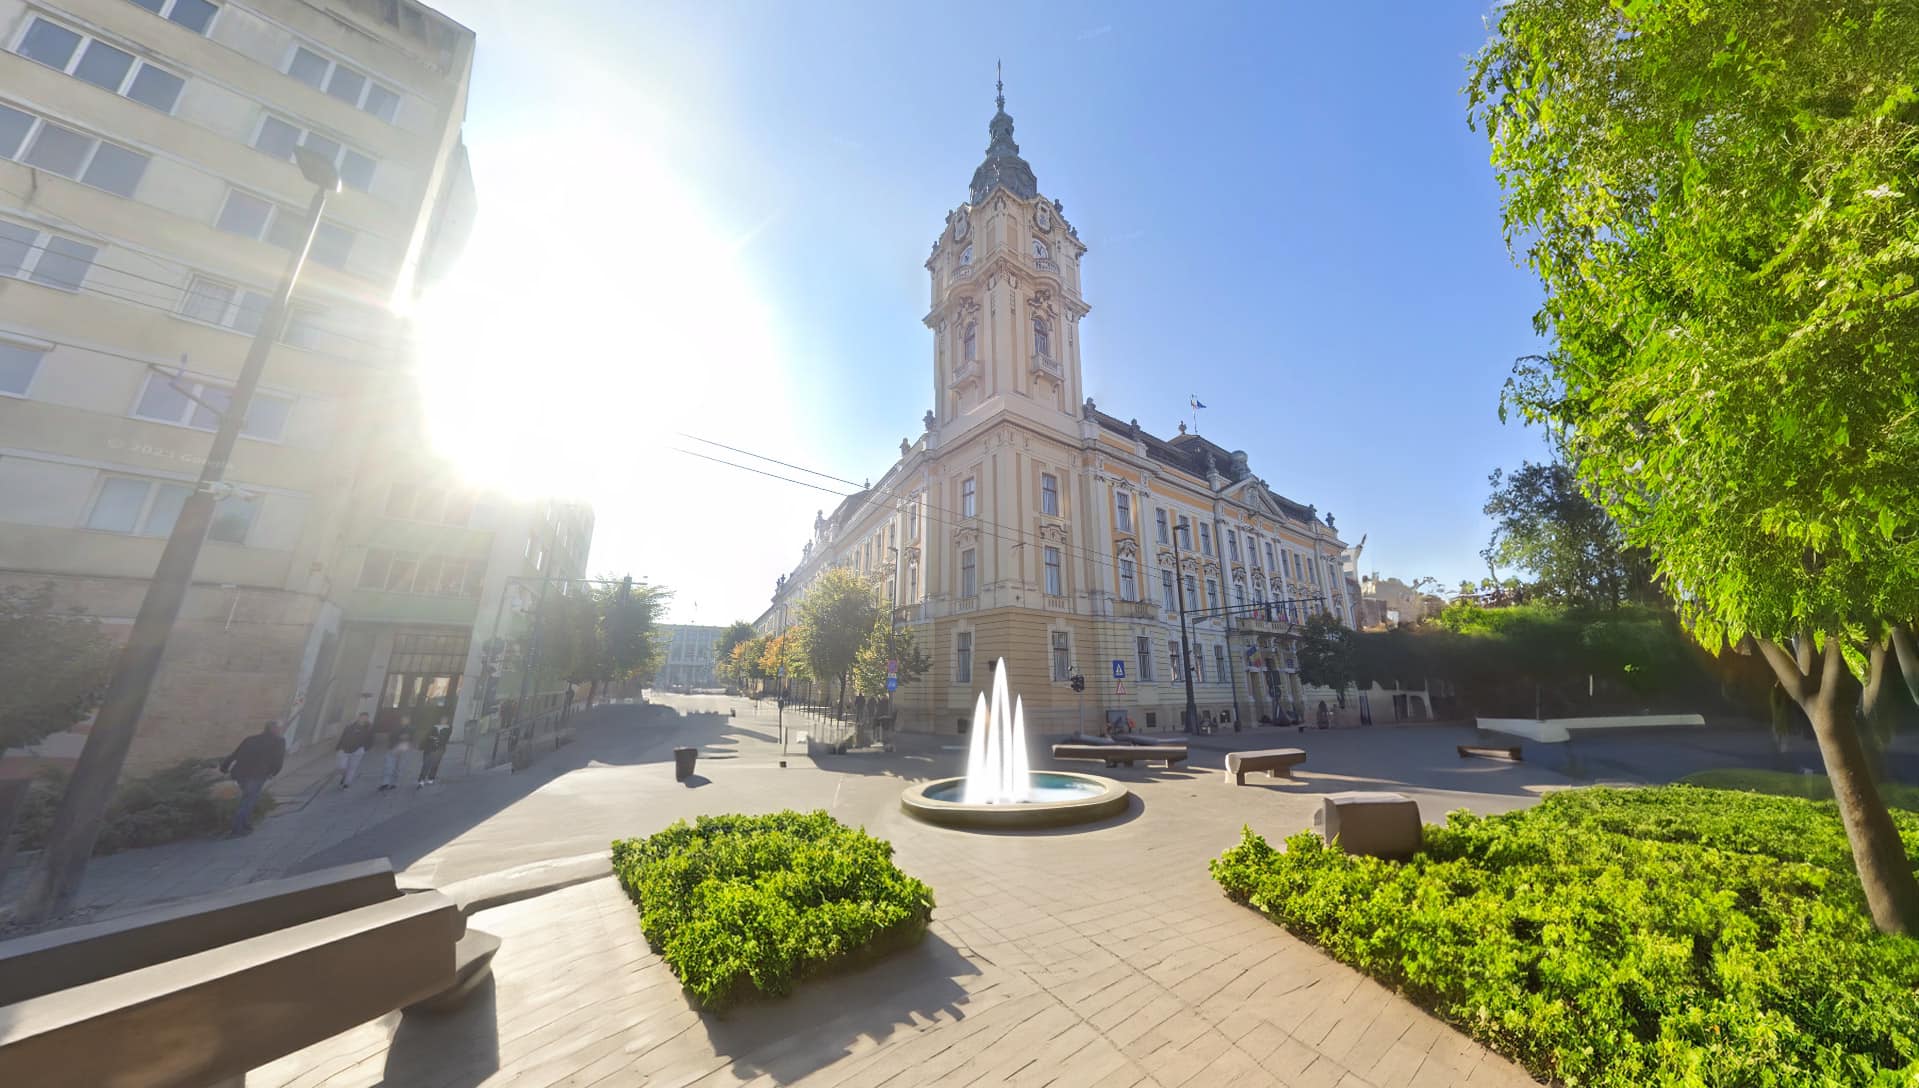 The City Hall, looking towards Piata Lucian Blaga